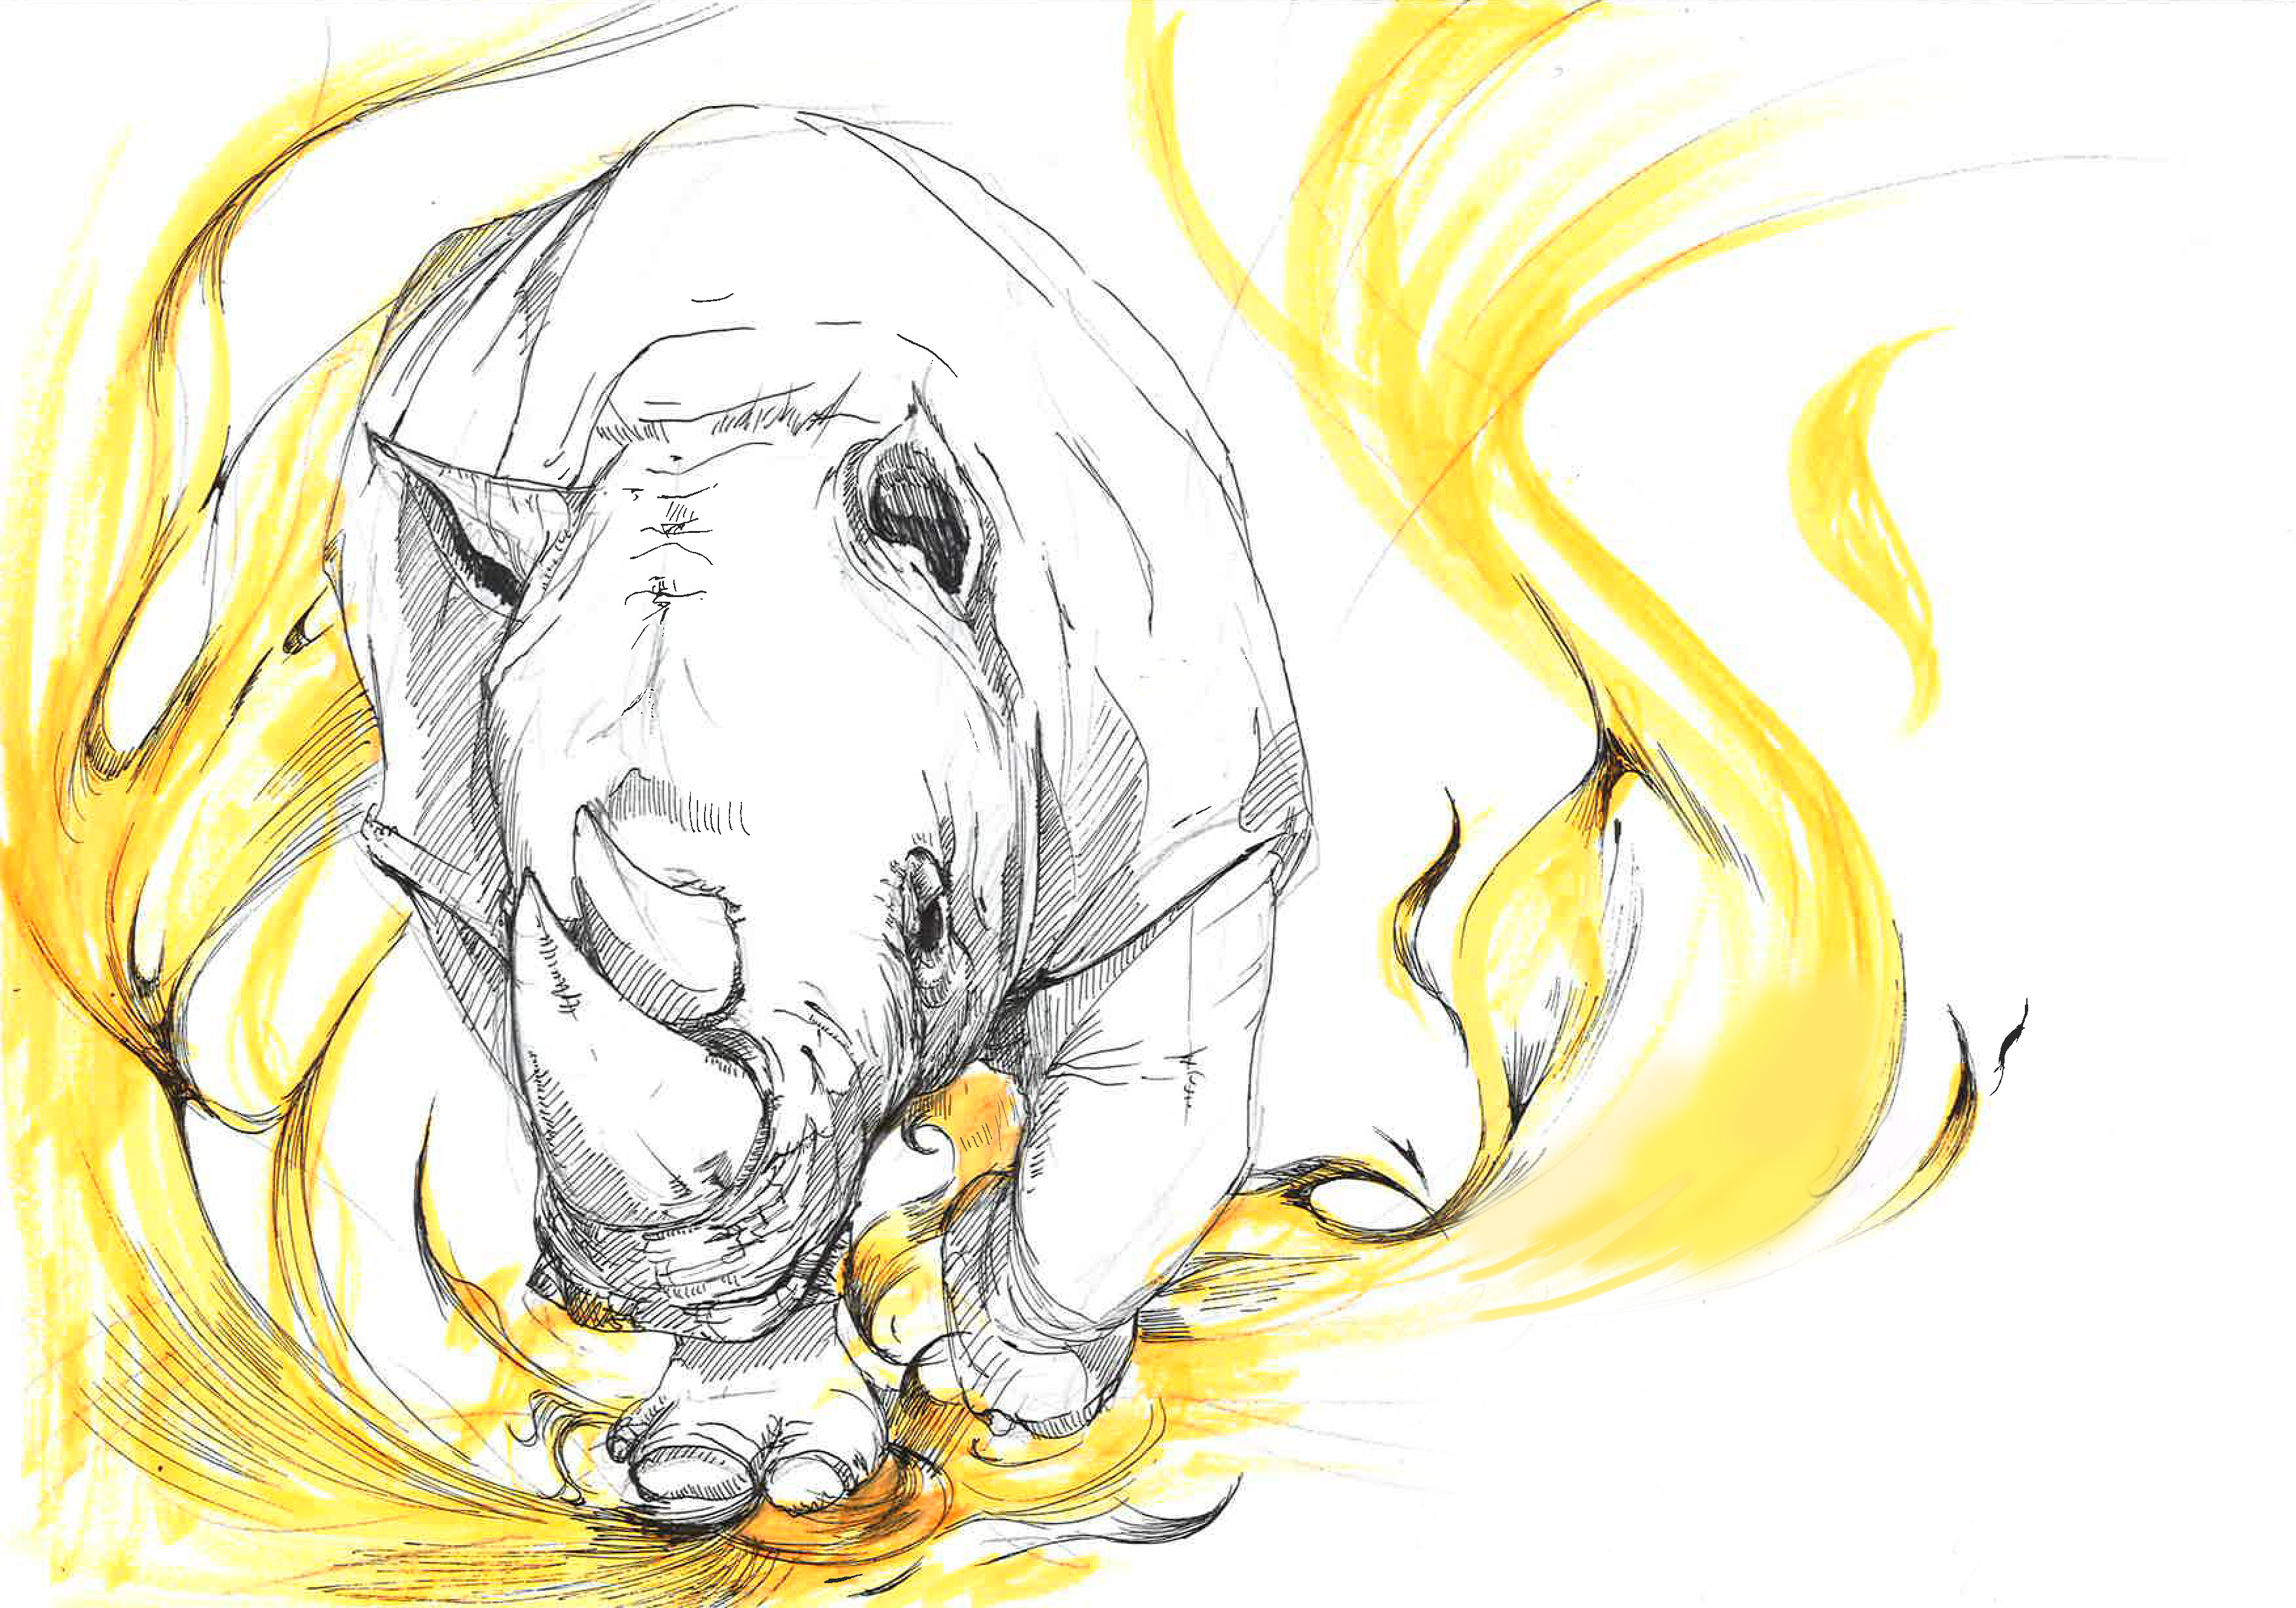 rushing rhino on the fire flame